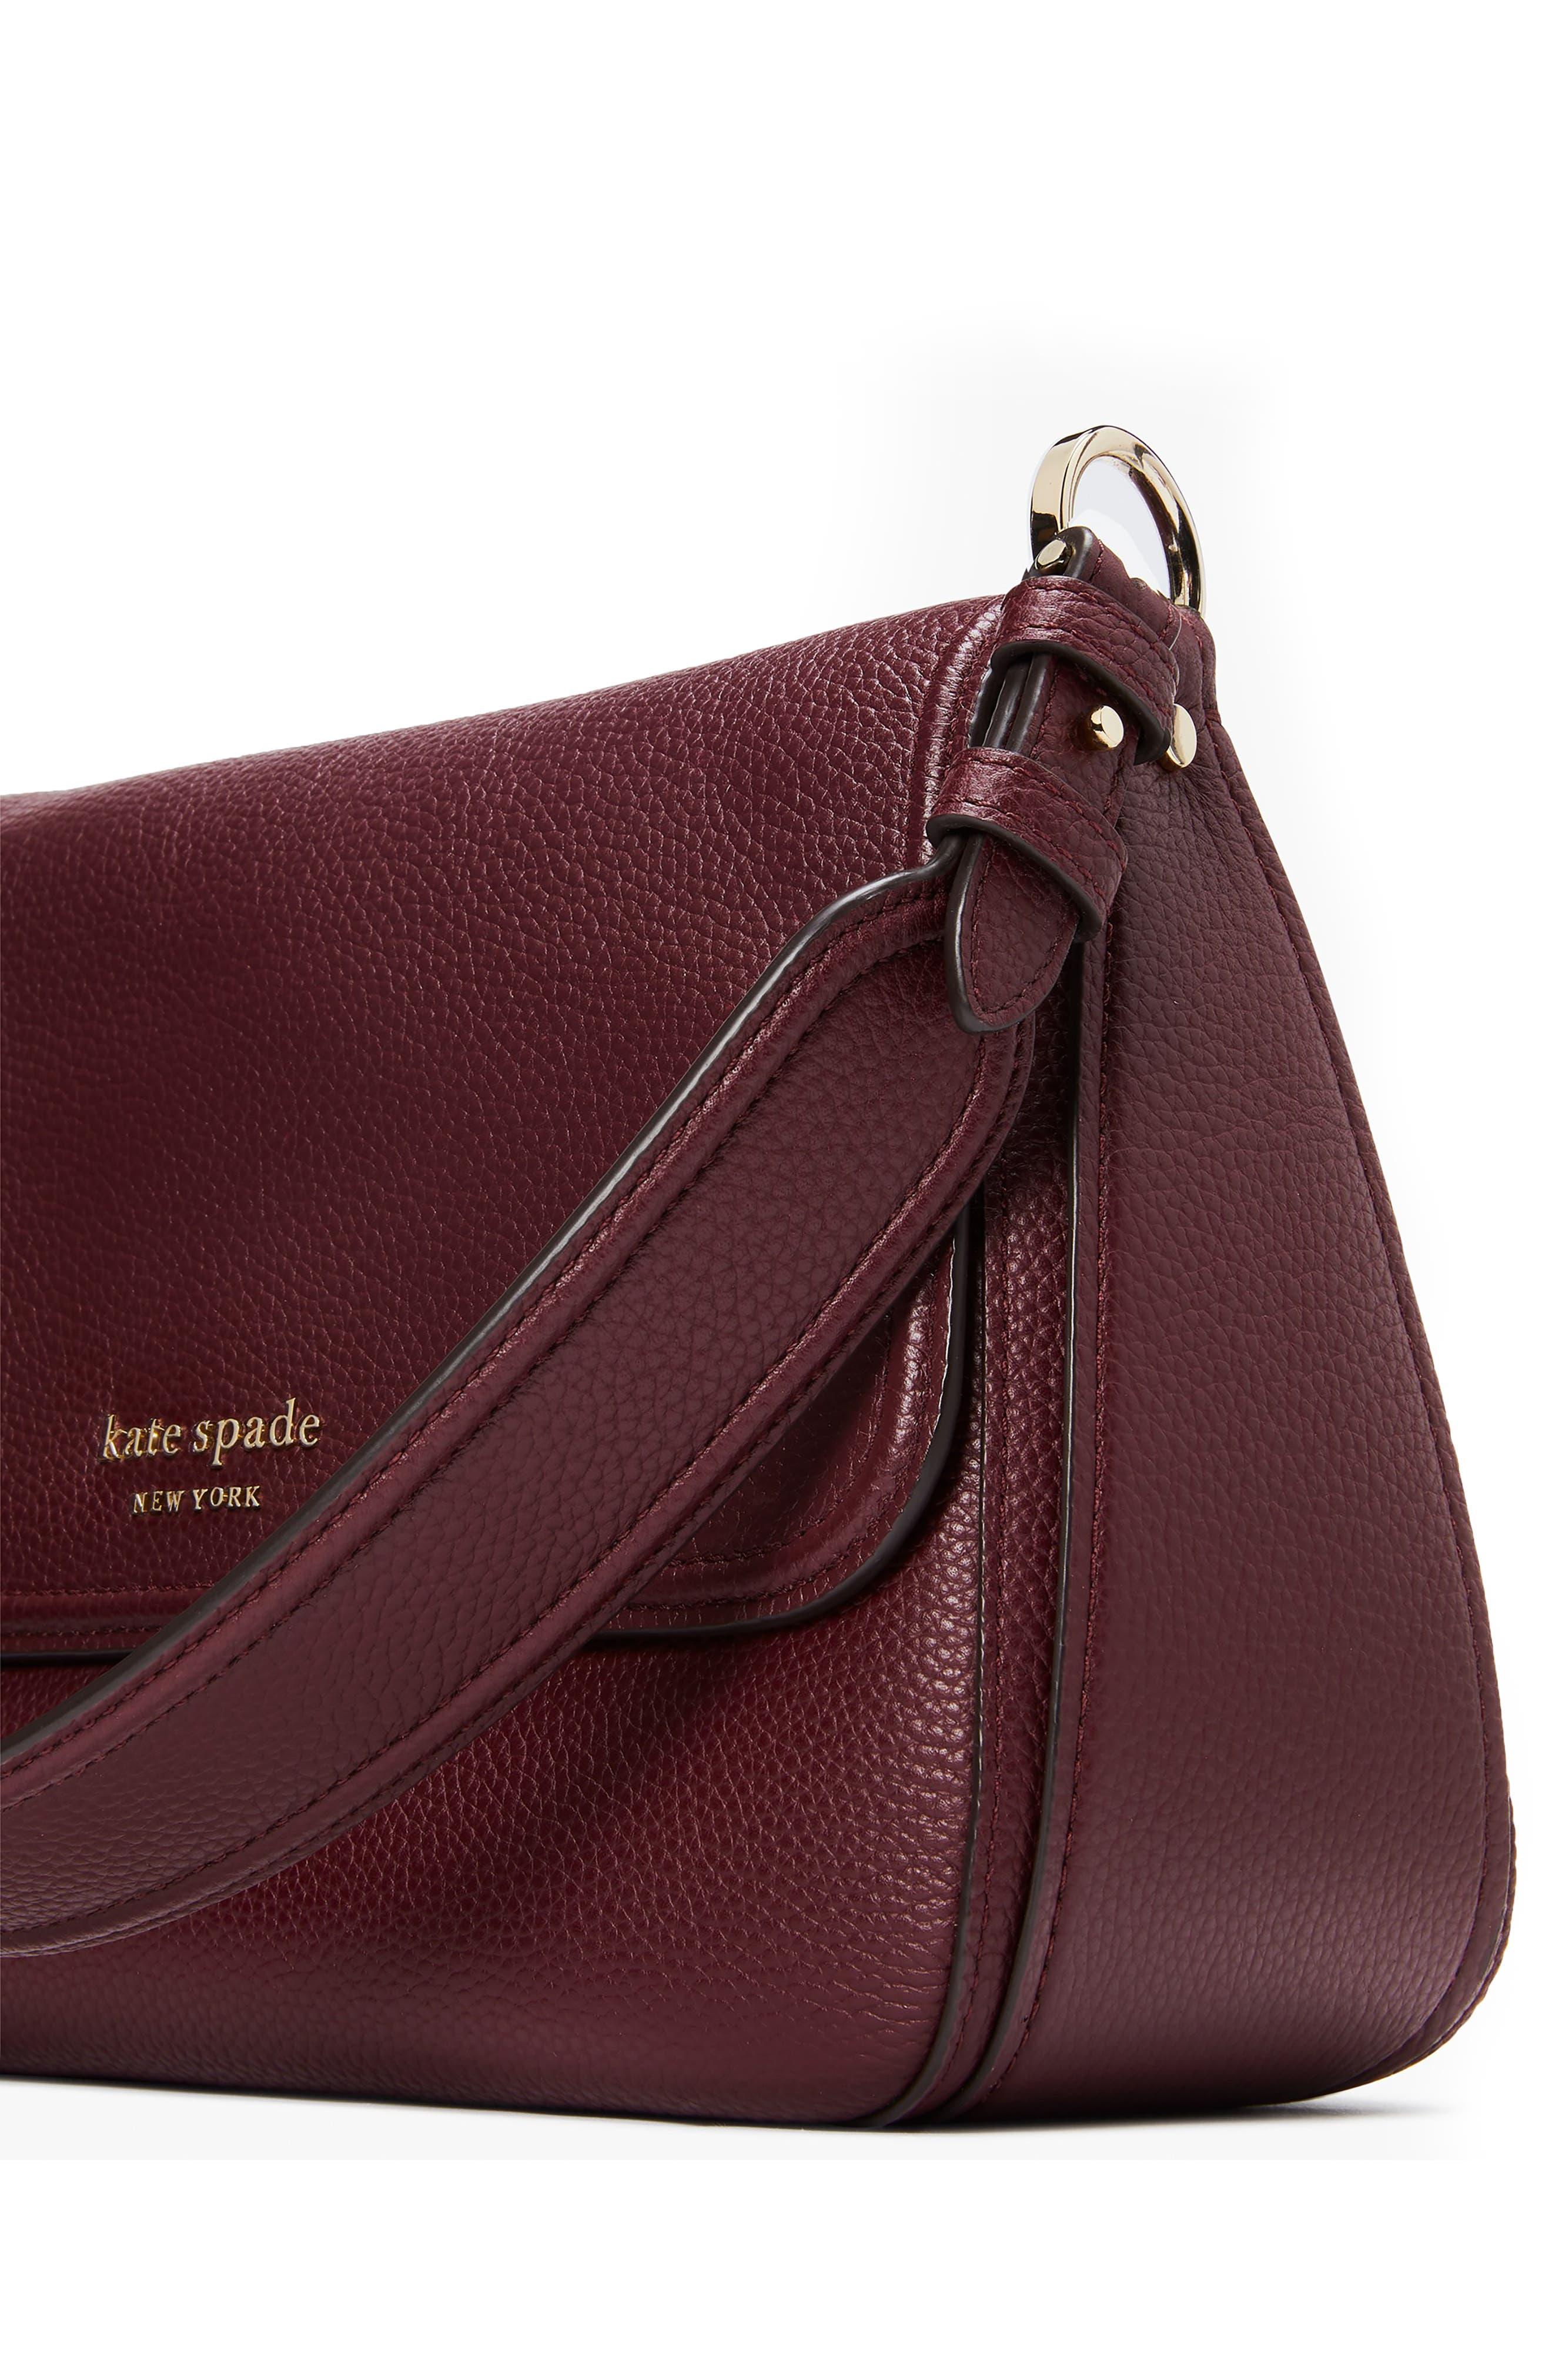 Kate Spade New York Hudson Pebbled Leather Medium Convertible Crossbody - Cordovan